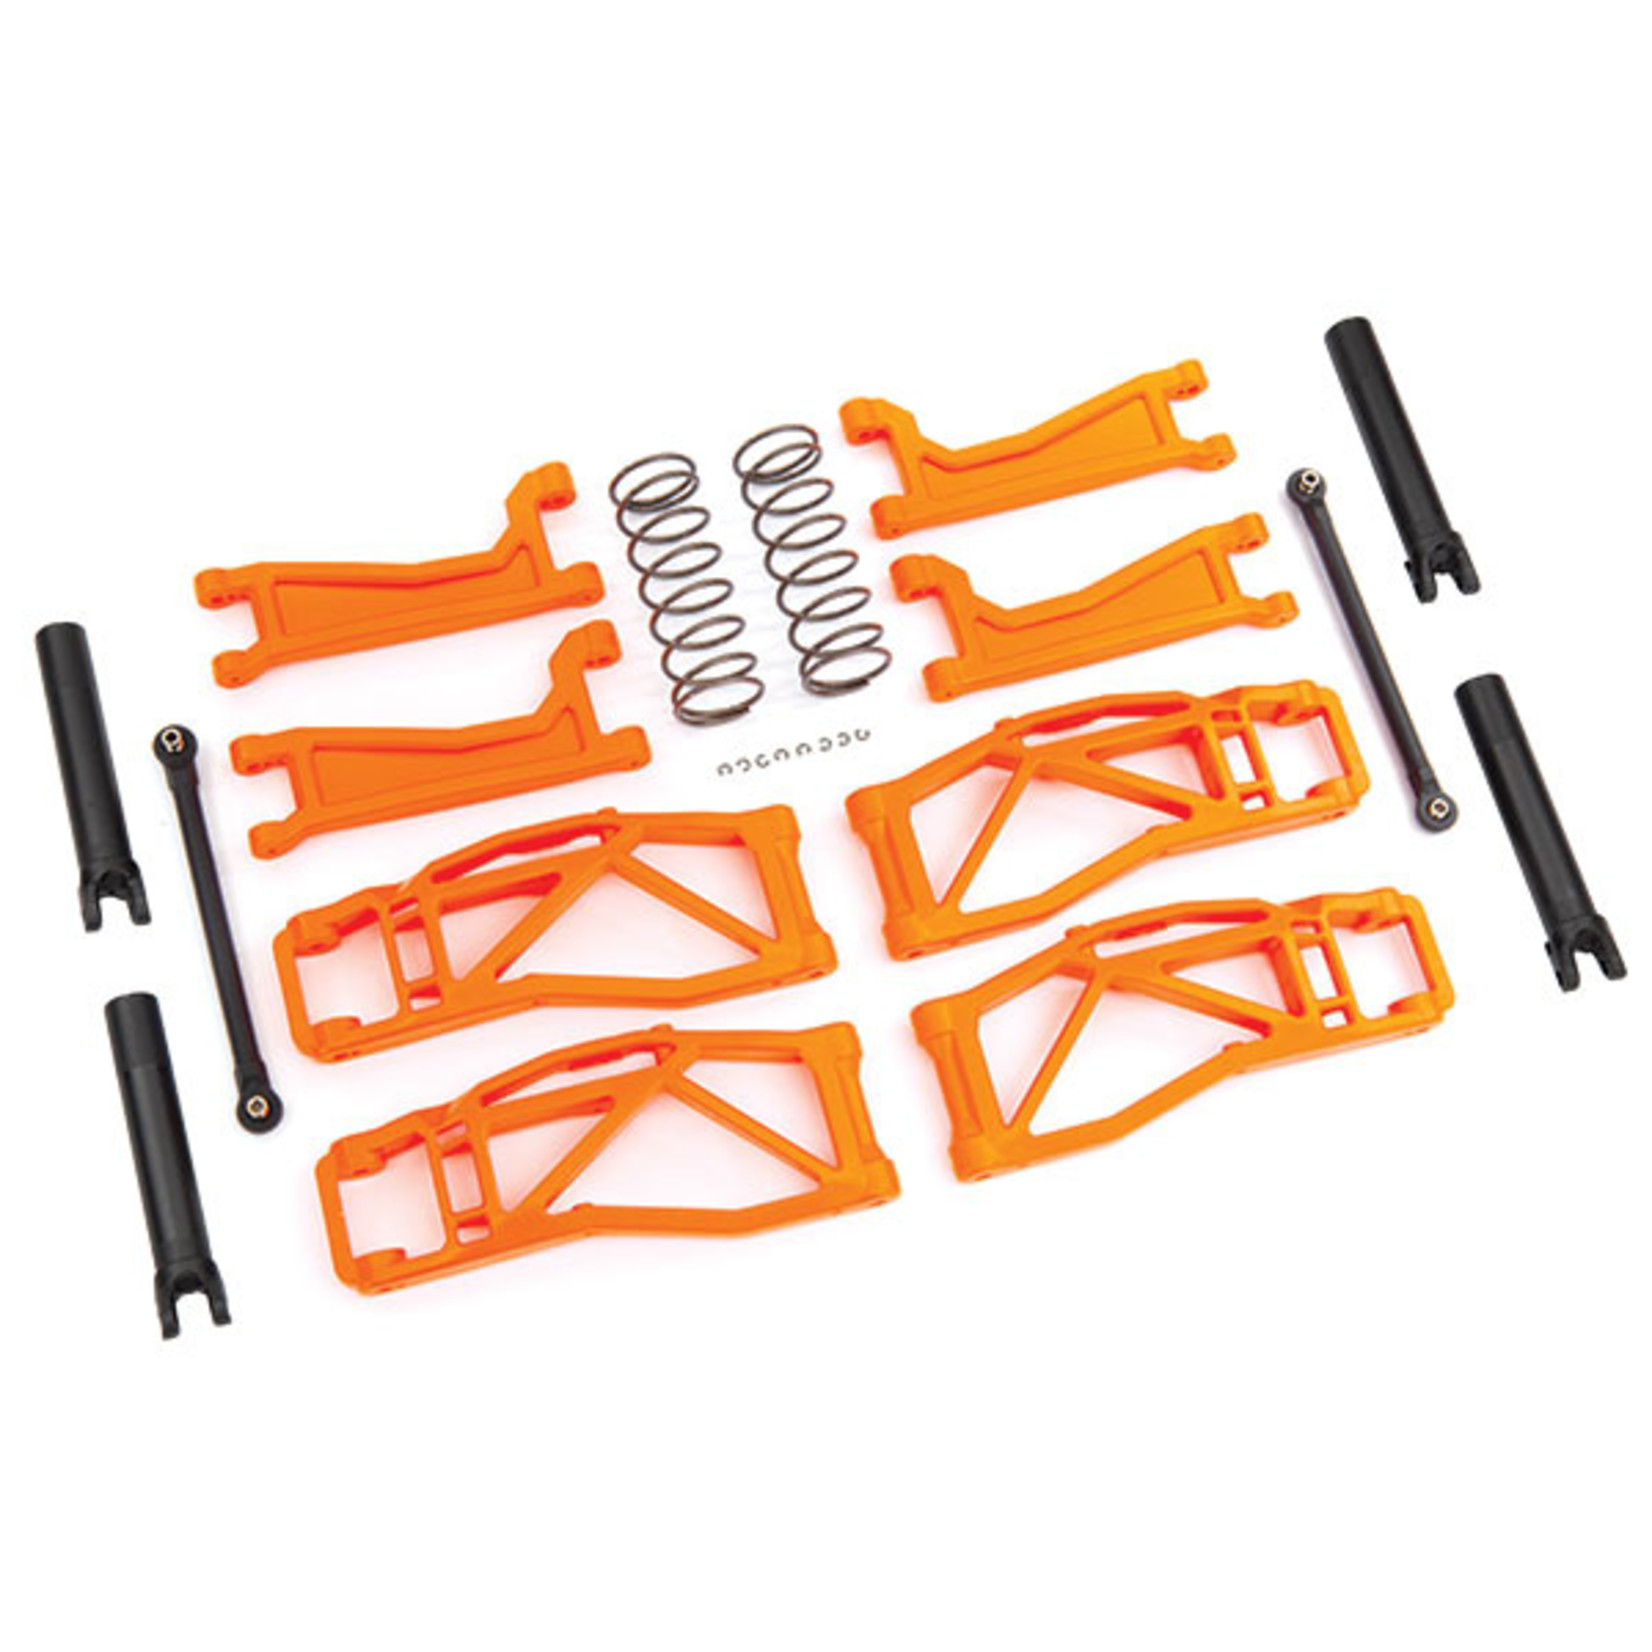 Traxxas 8995T - Suspension kit, WideMaxx, orange (includes